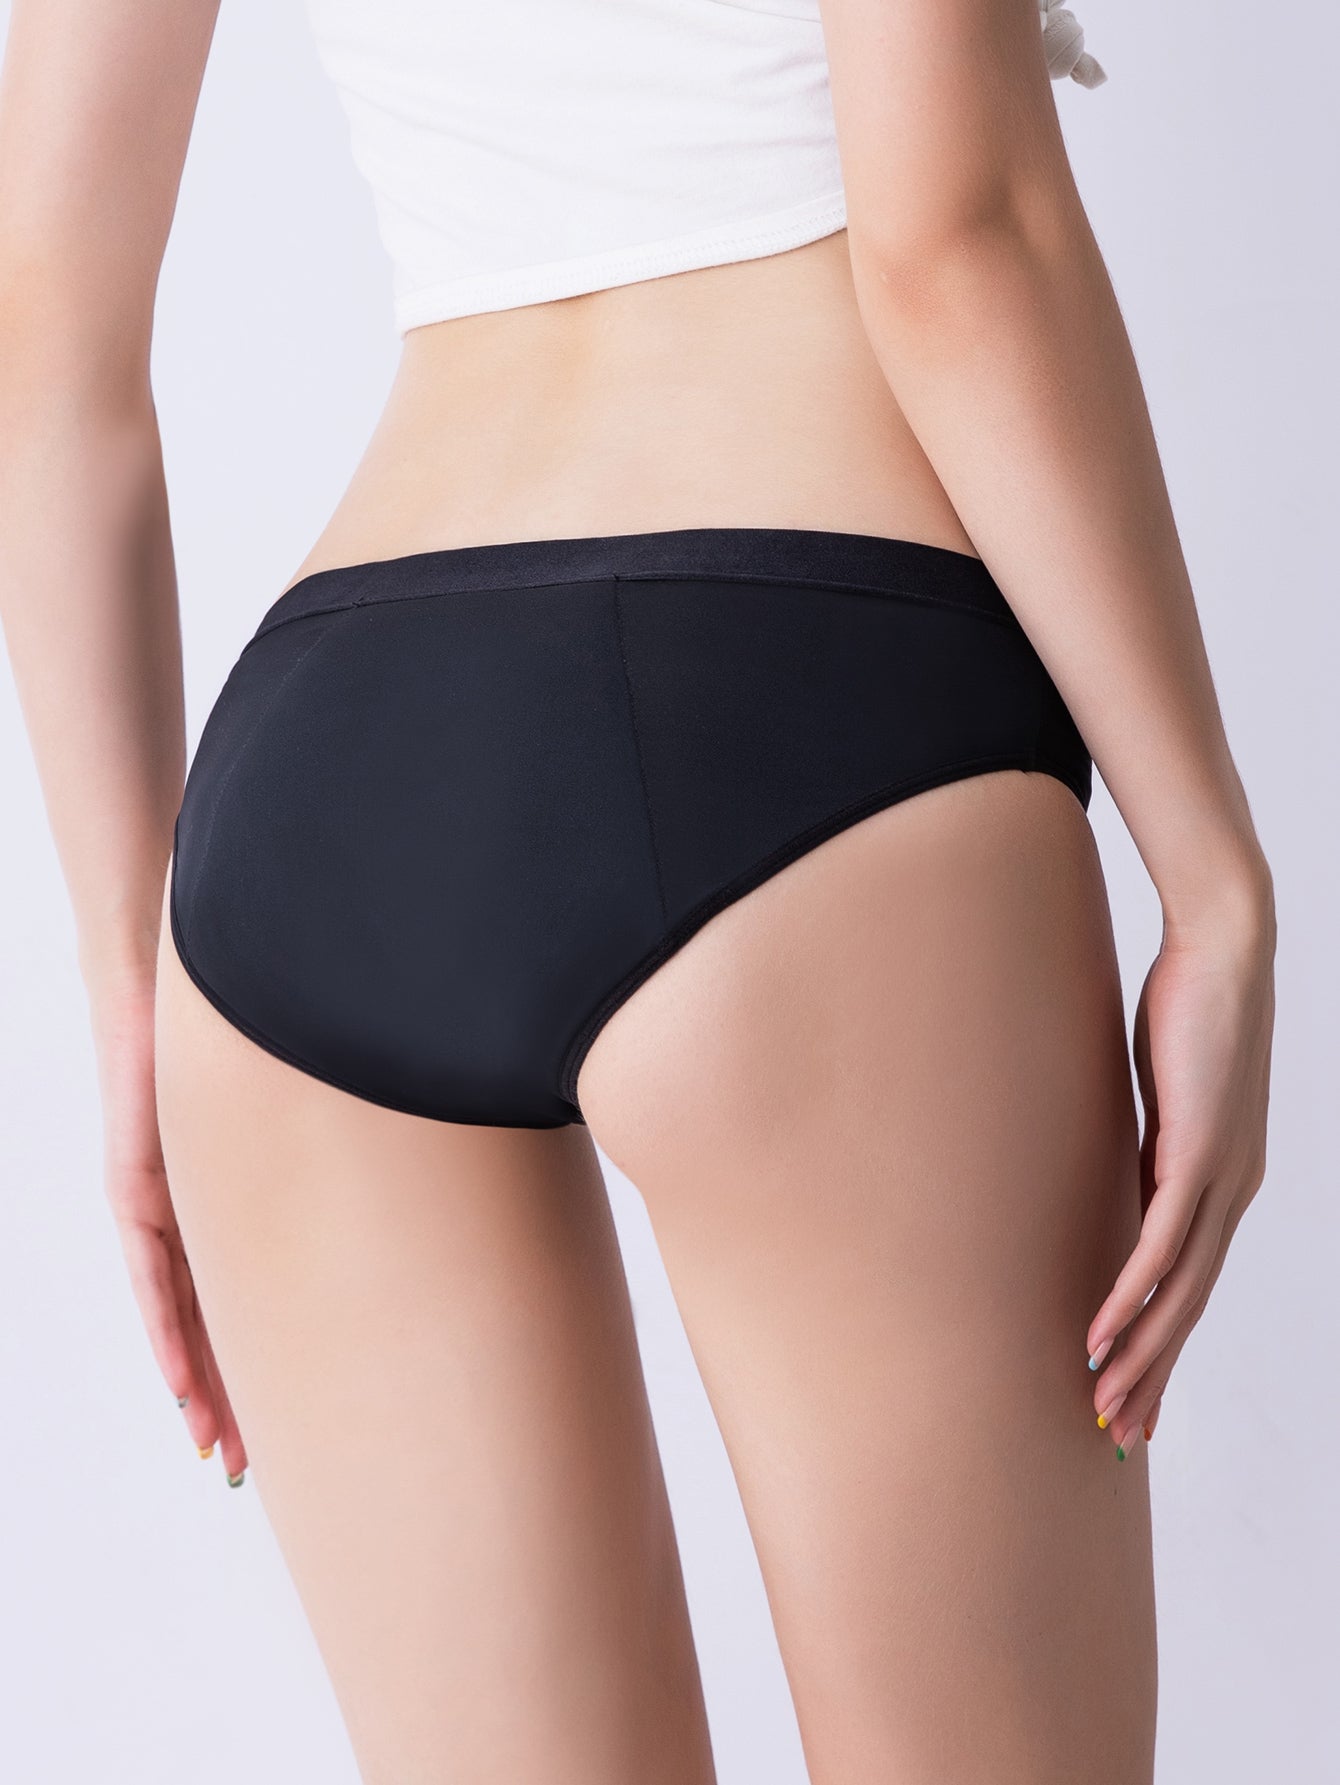 Period Underwear Comfortable Leak Proof Overnight Menstrual Panty Brief Sai Feel